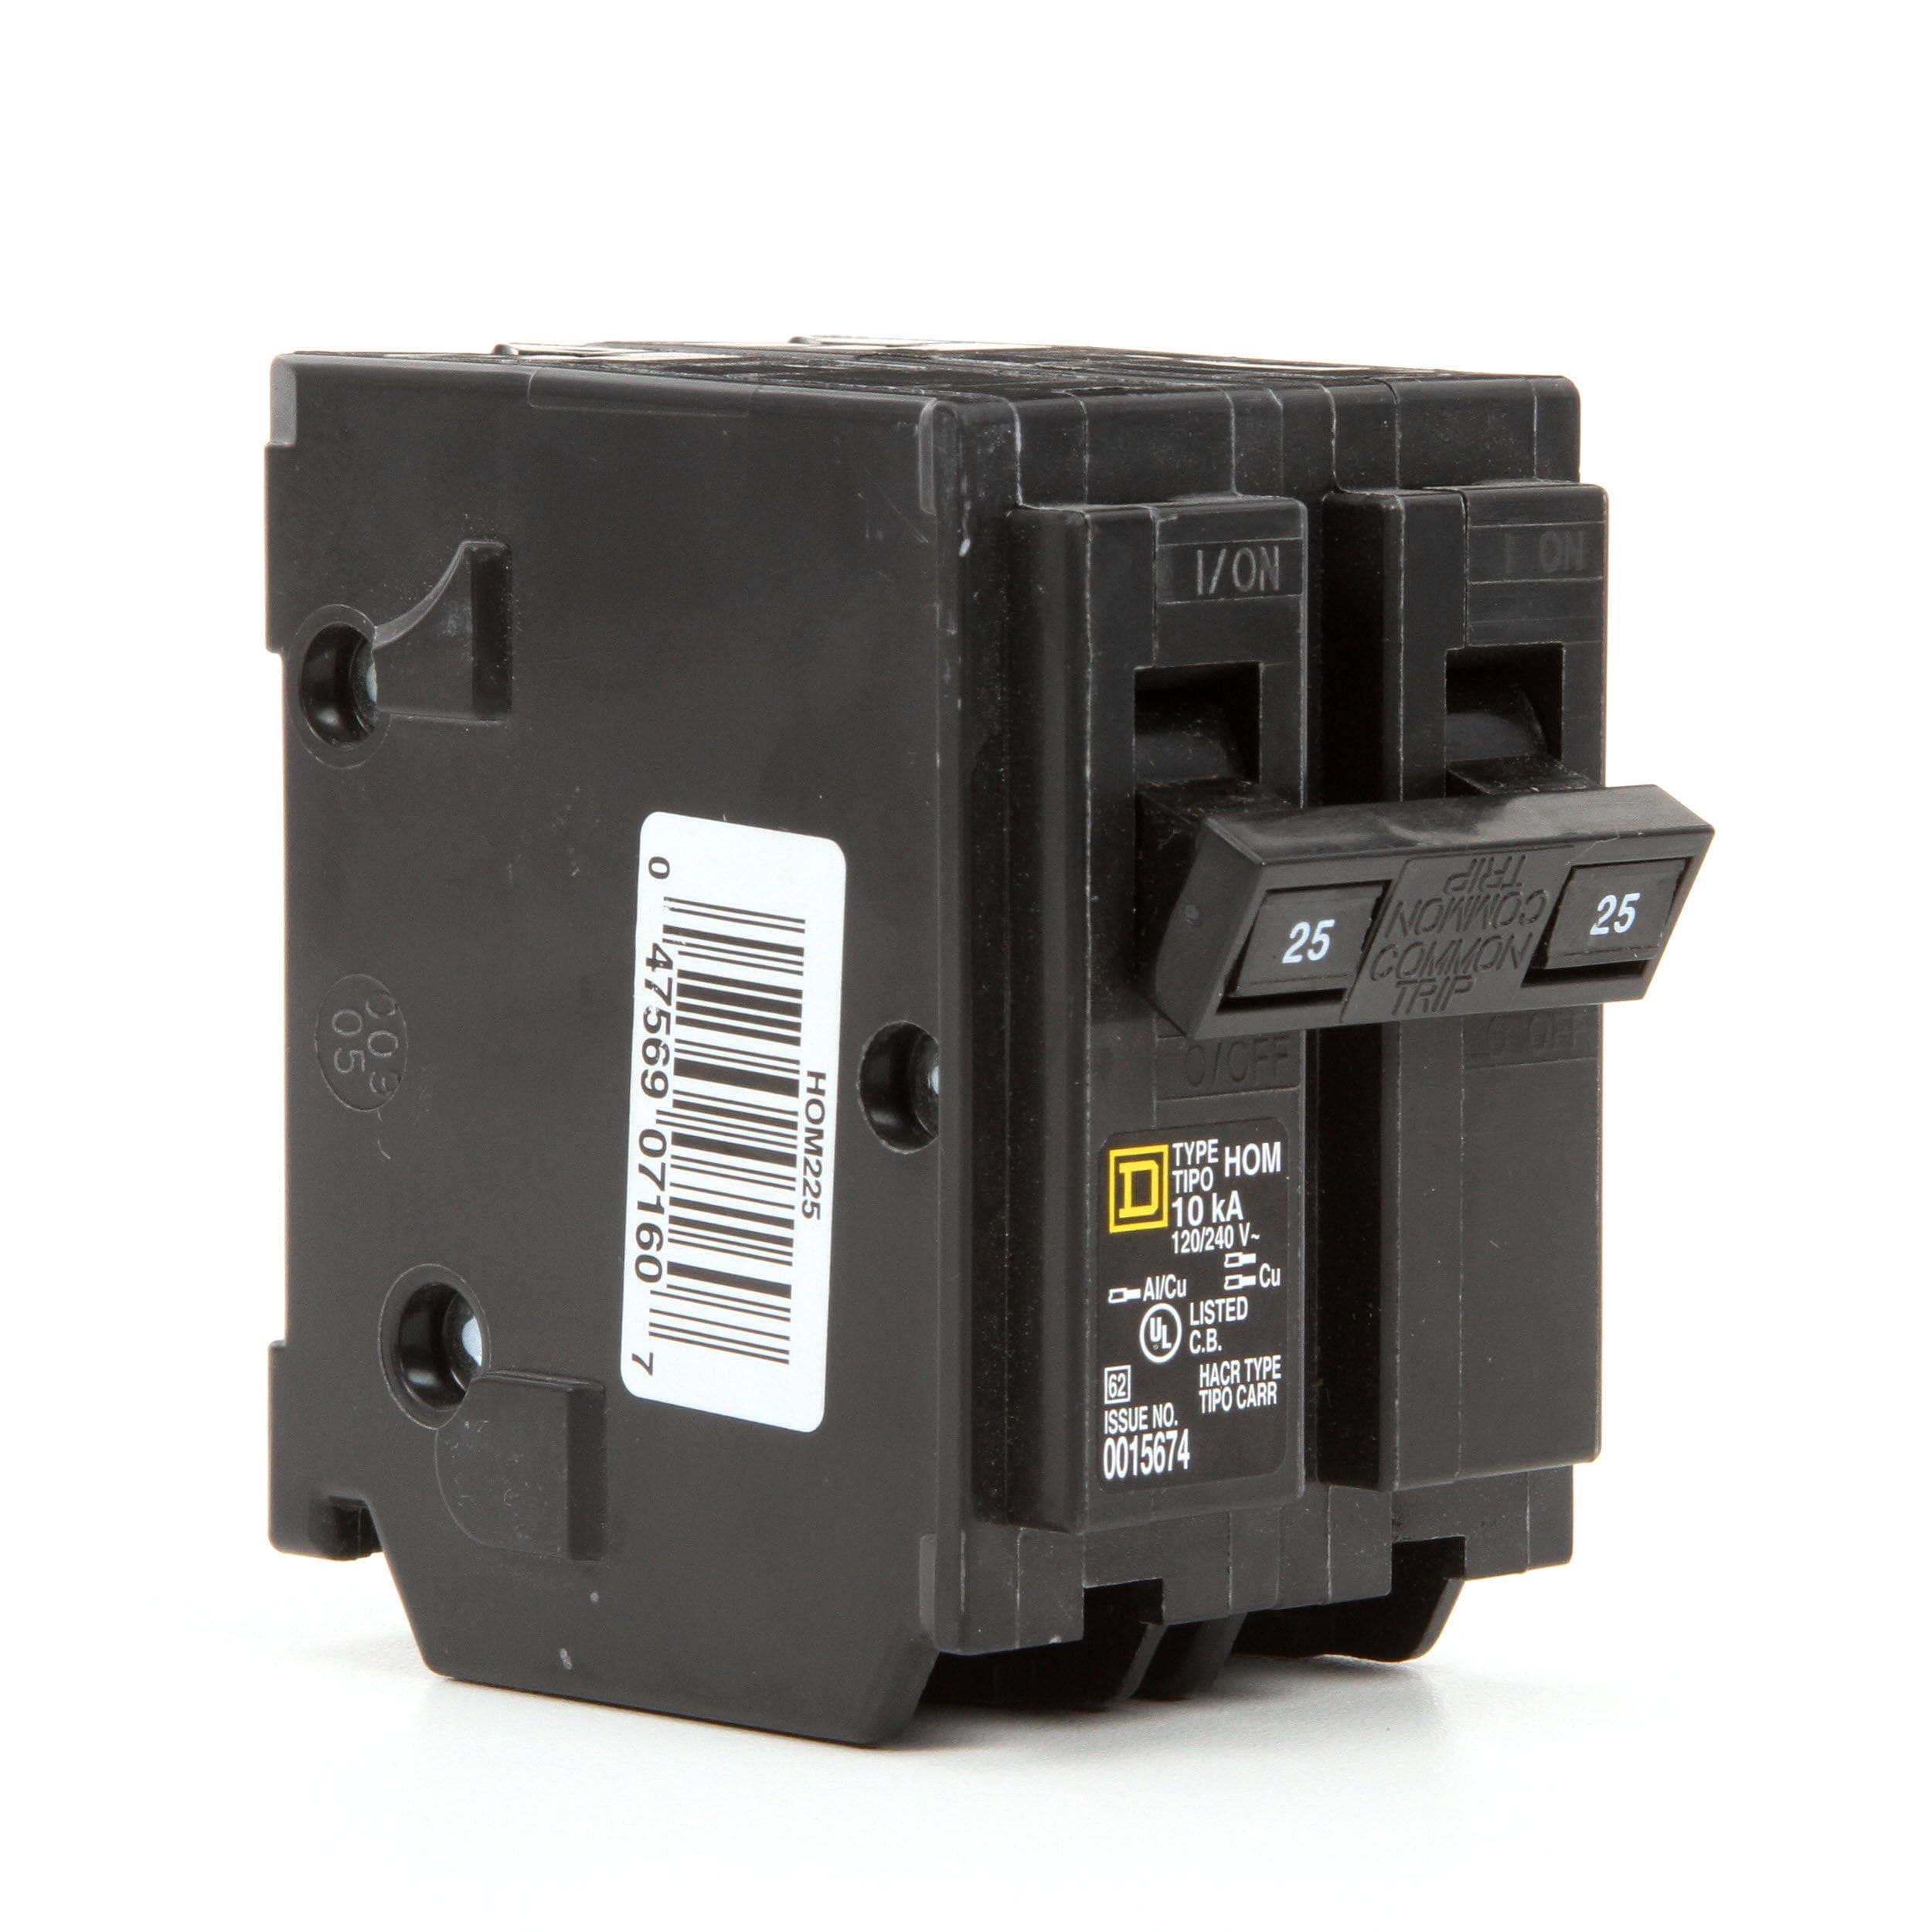 Details about   SCHNEIDER ELECTRIC Miniature Circuit Breaker 240-Volt 25-Amp QO3251021 Switch Fu 